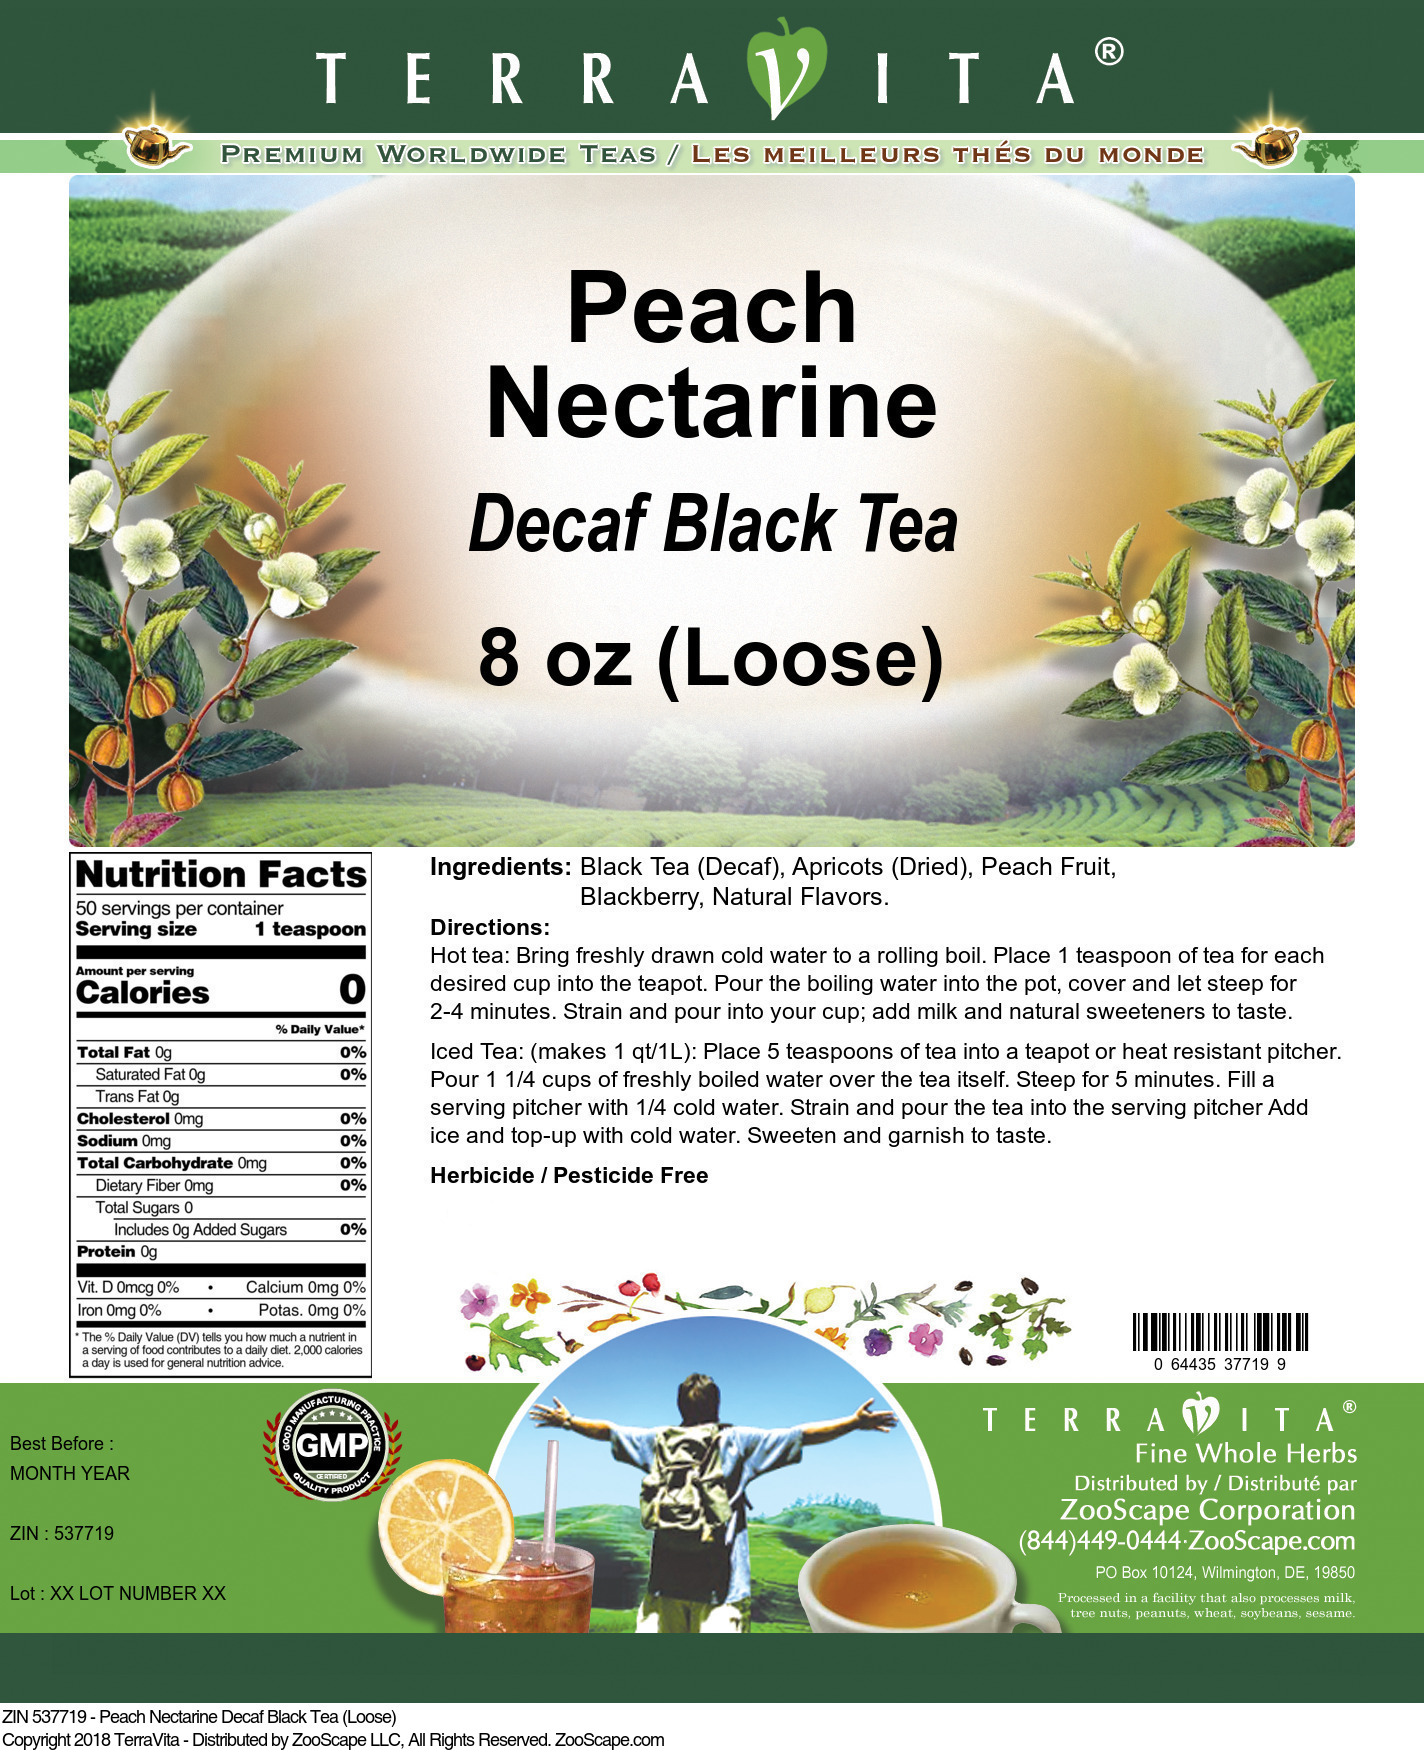 Peach Nectarine Decaf Black Tea (Loose) - Label